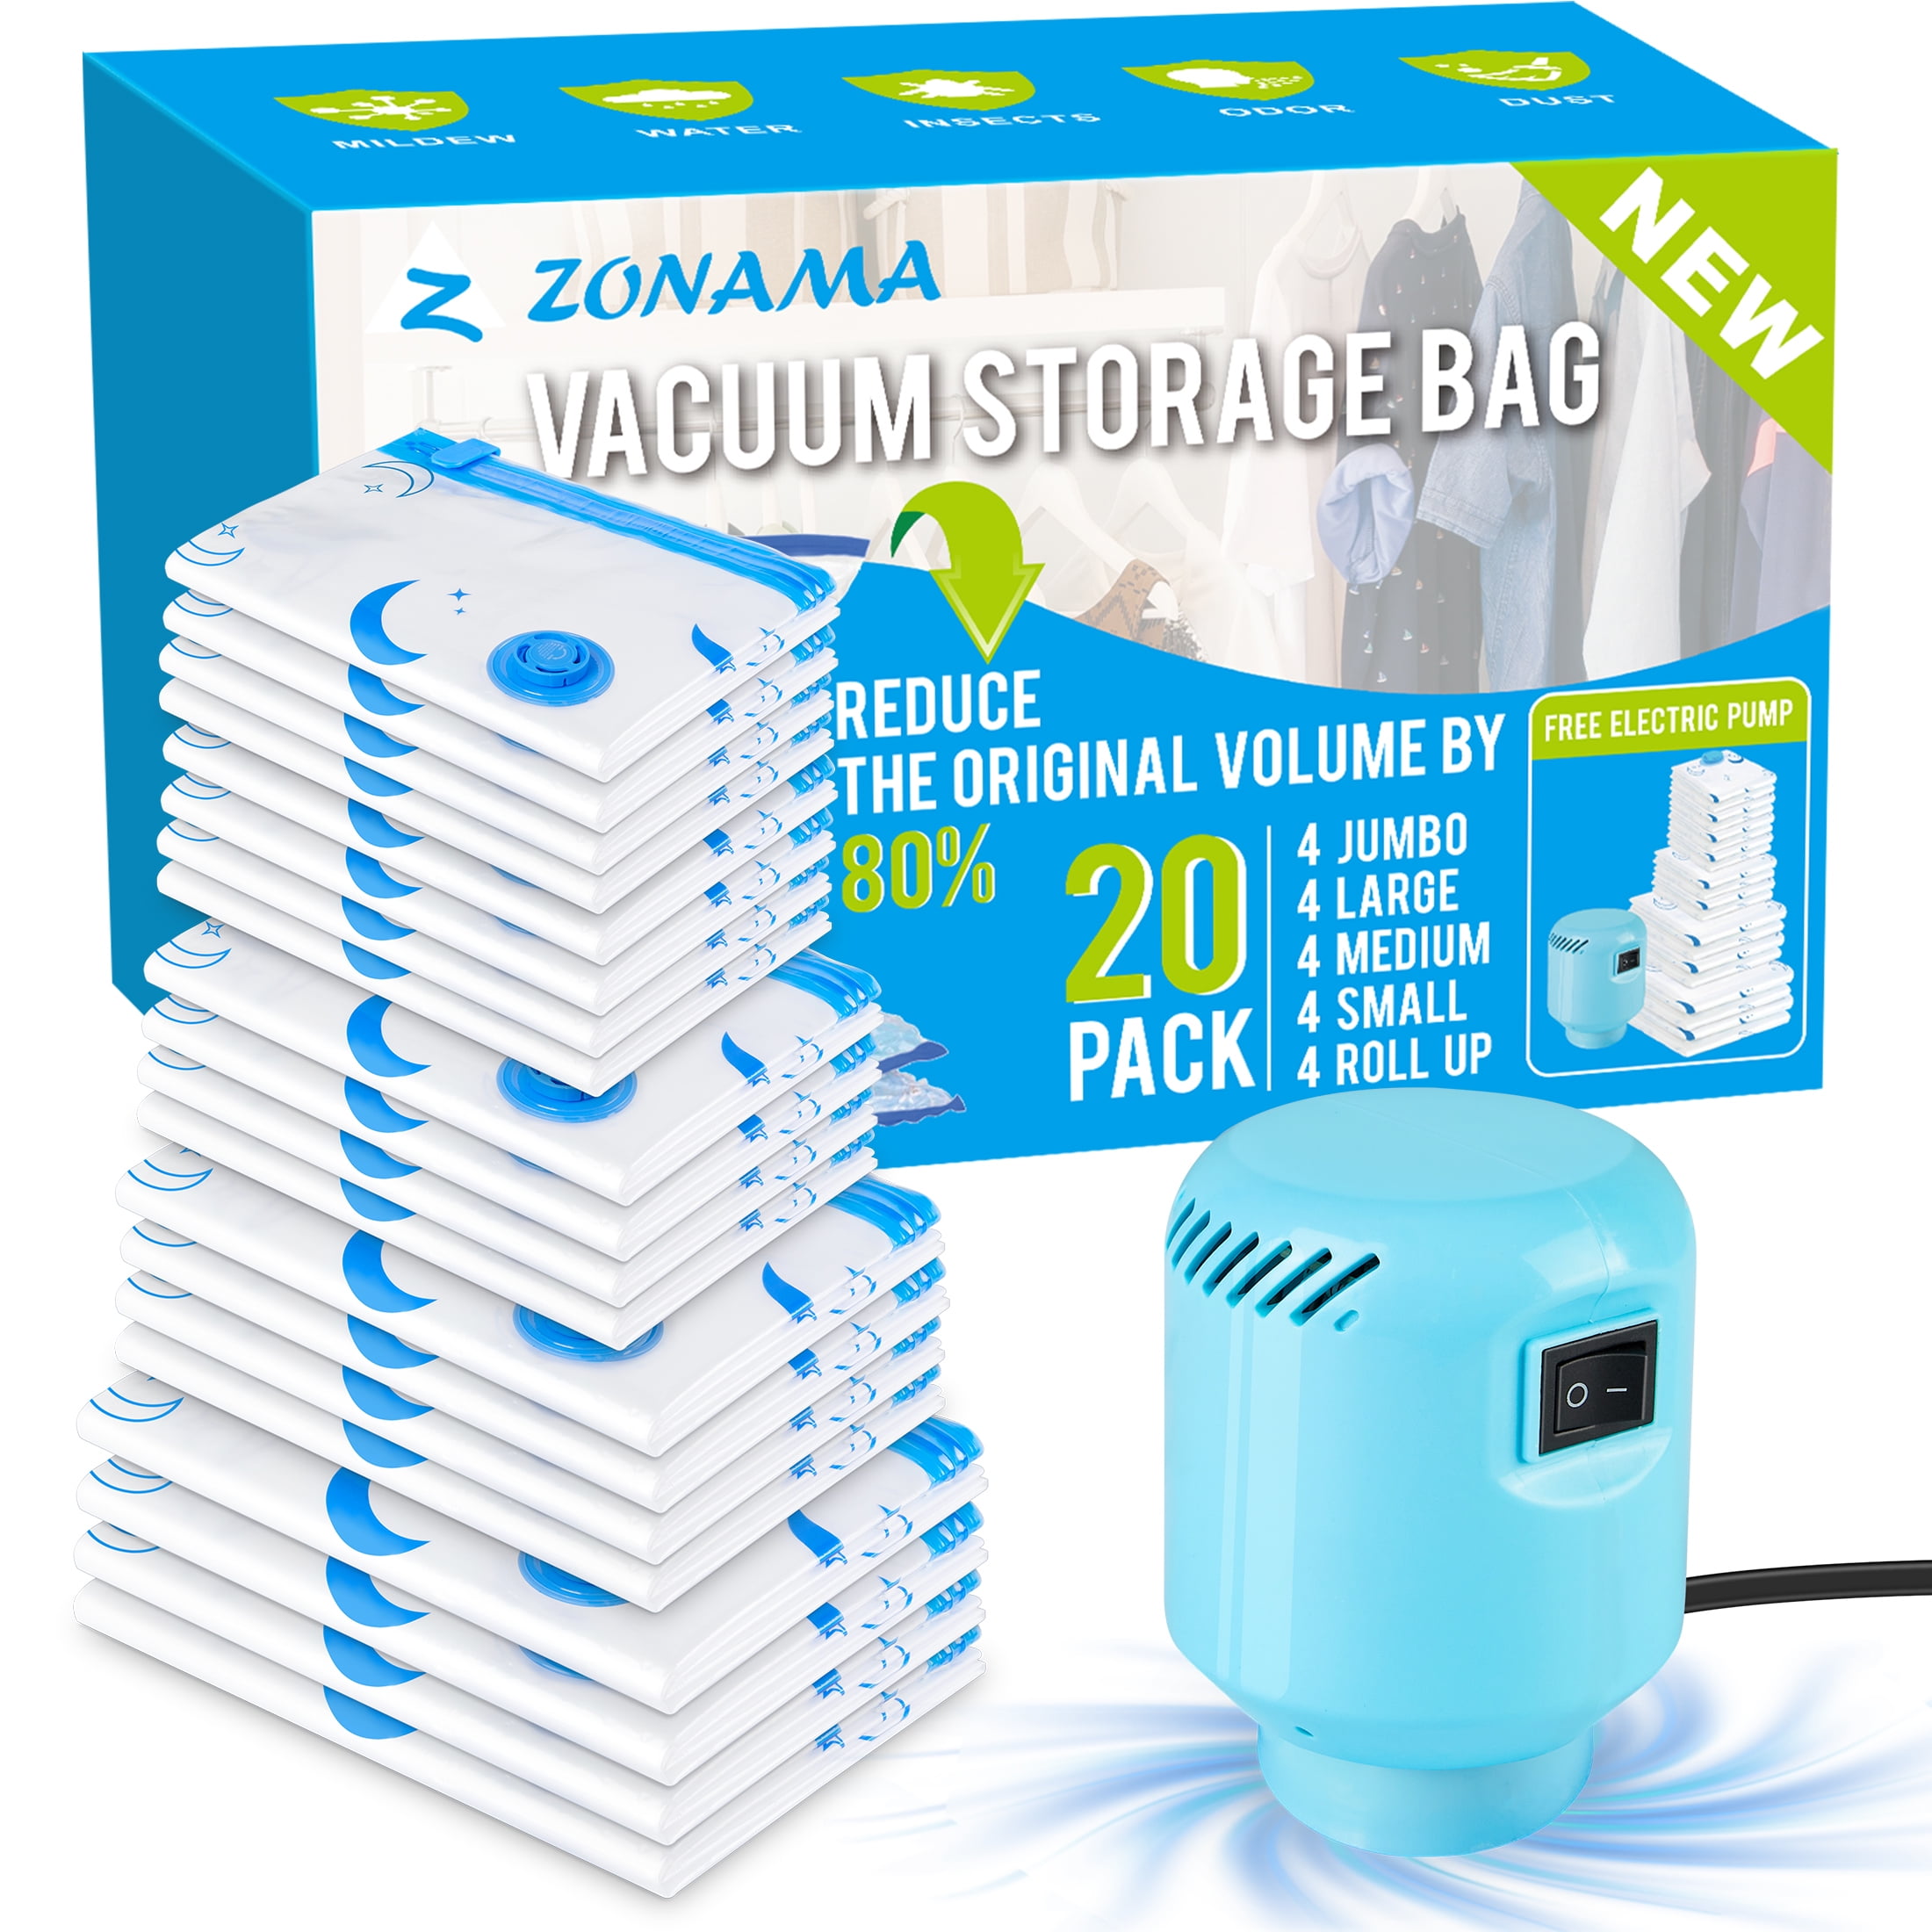 DONAMA Vacuum Storage Bags with Electric Pump ,10 Pack Jumbo Size